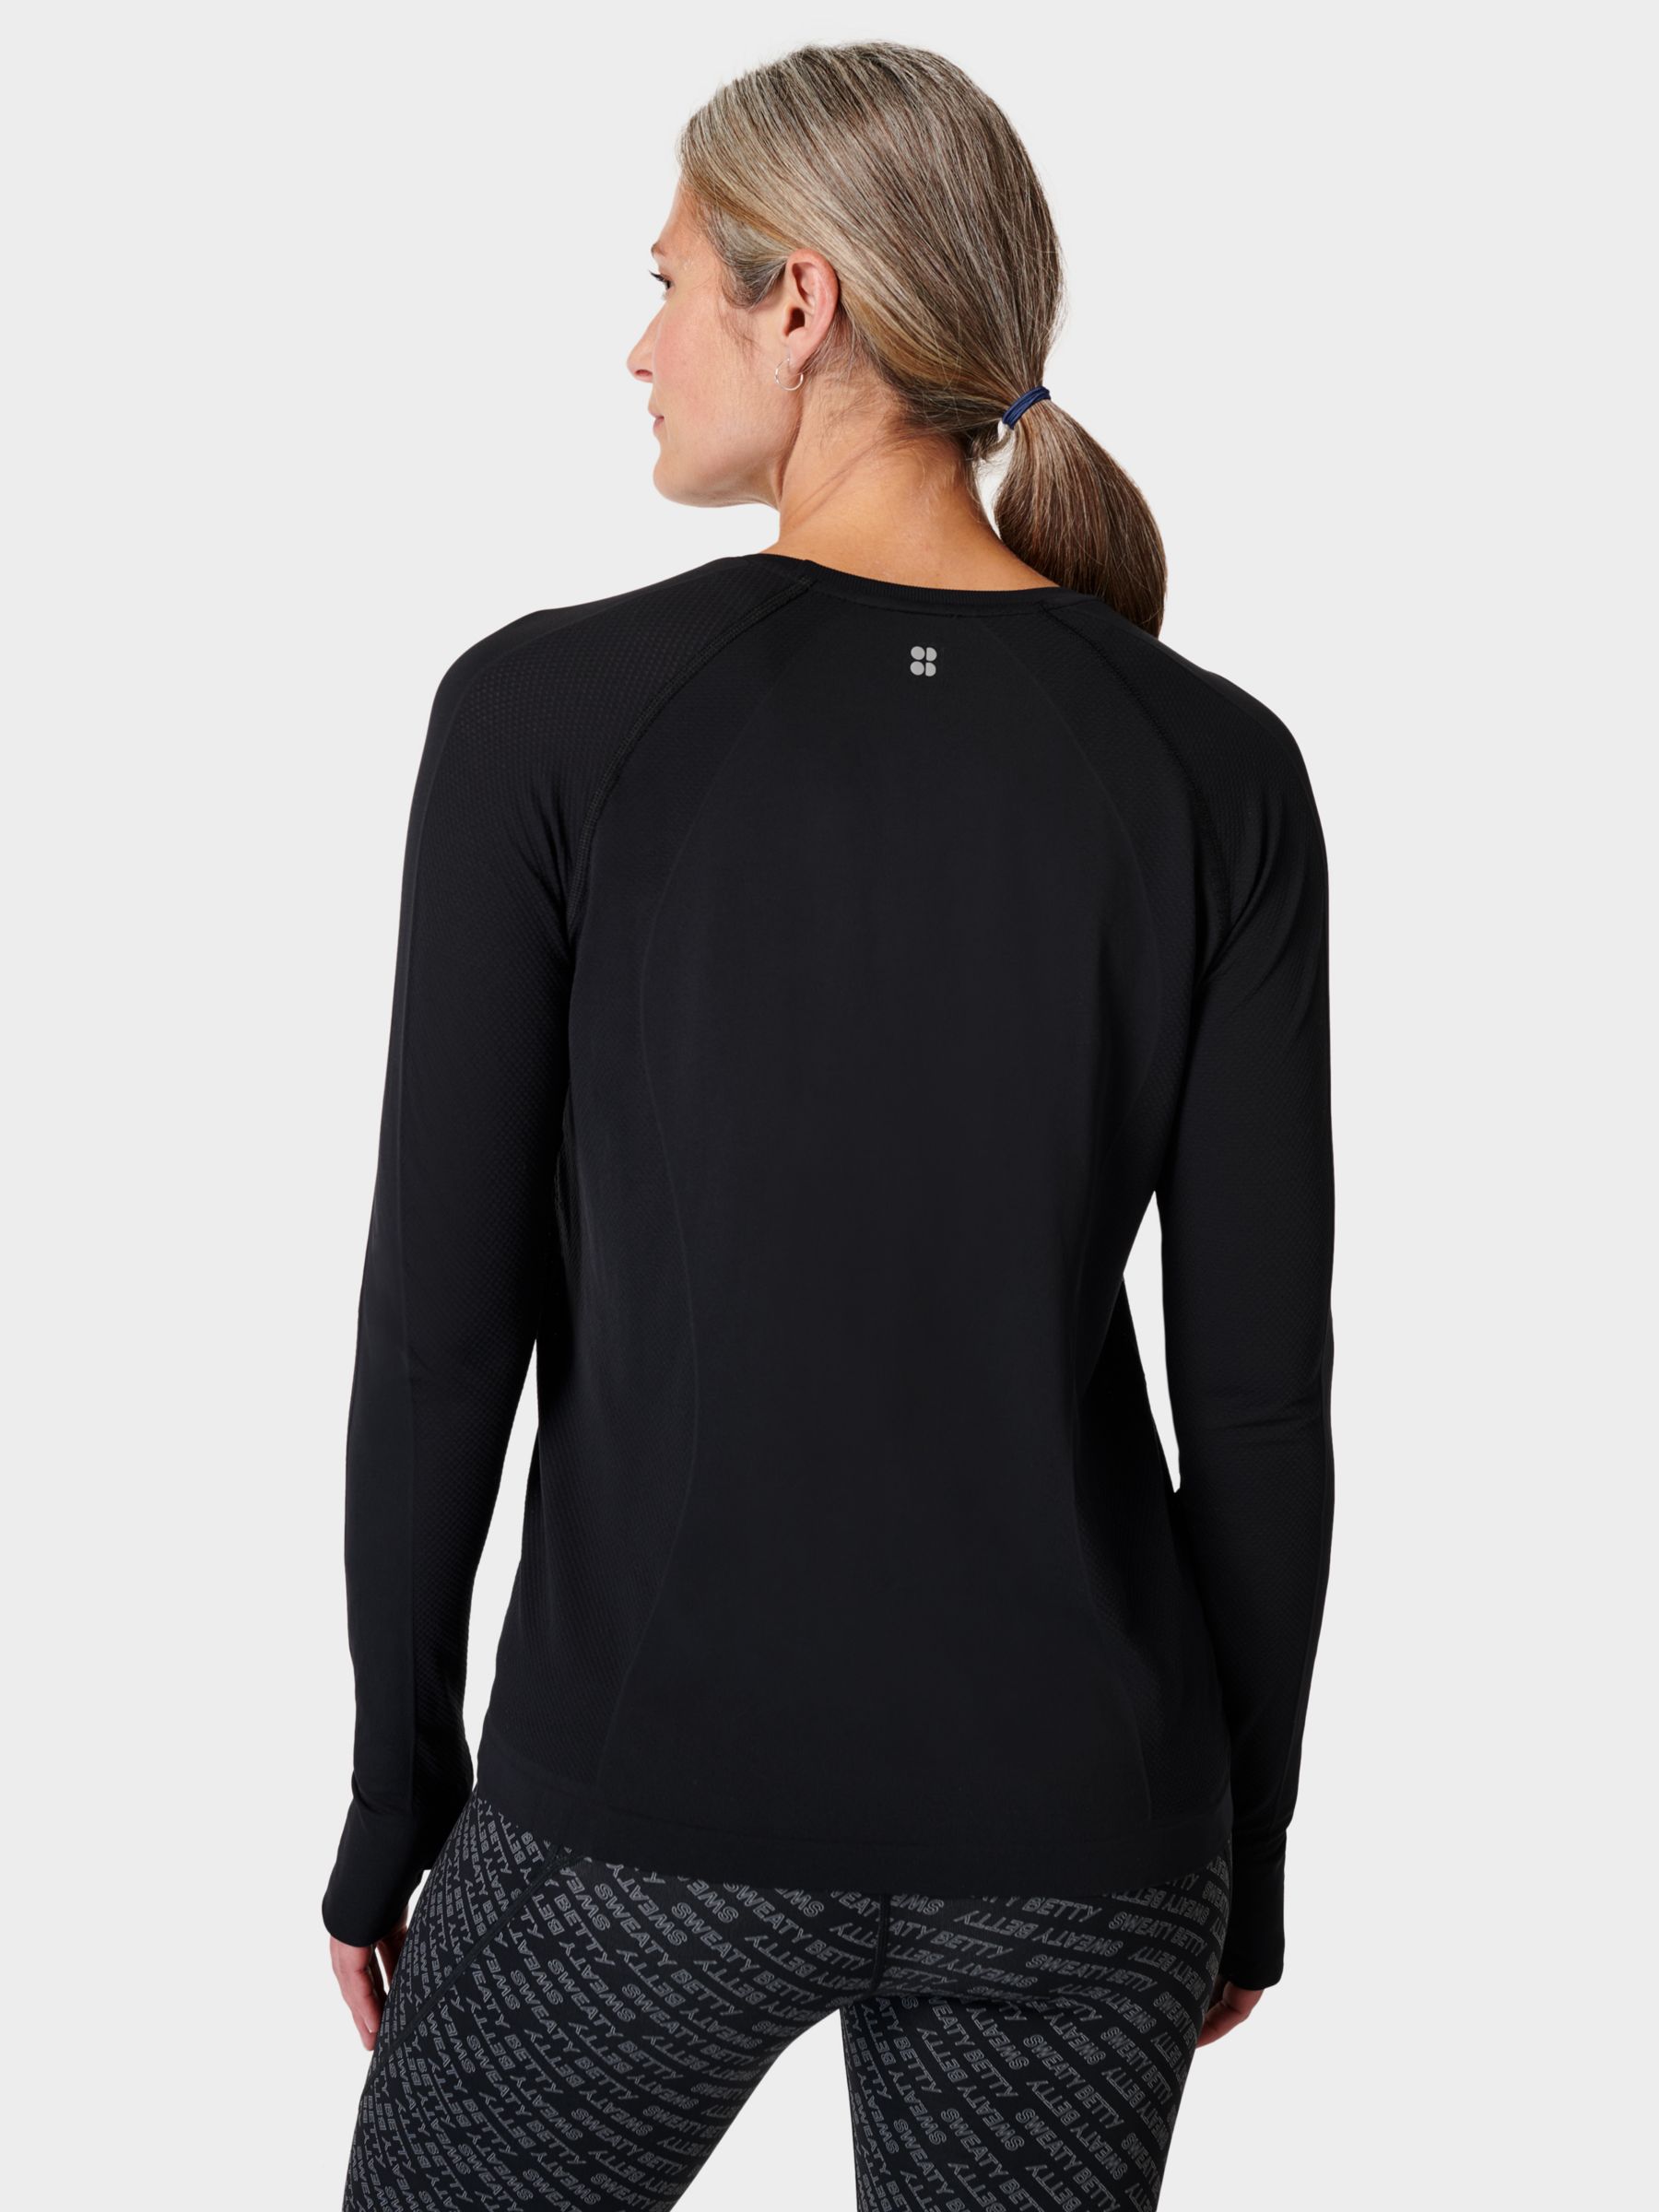 Buy Sweaty Betty Athlete Seamless Long Sleeve Gym Top, Black Online at johnlewis.com